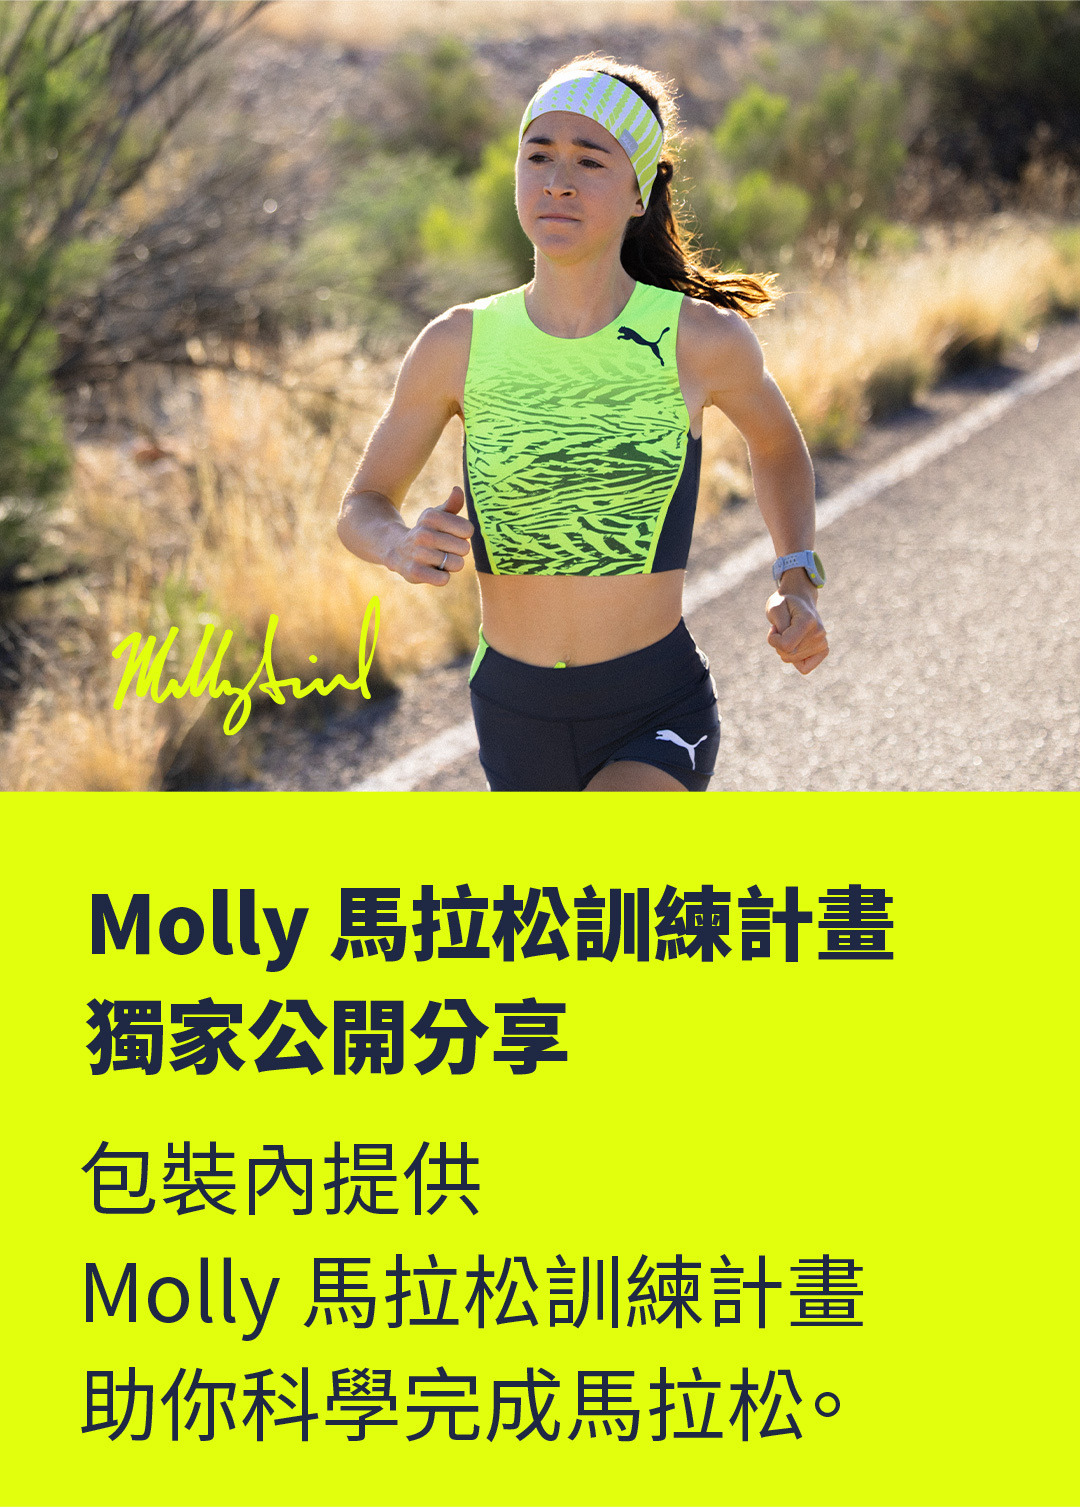 Molly 馬拉松訓練計畫 獨家公開分享：包裝內提供 Molly 馬拉松訓練計畫 助你科學完成馬拉松。